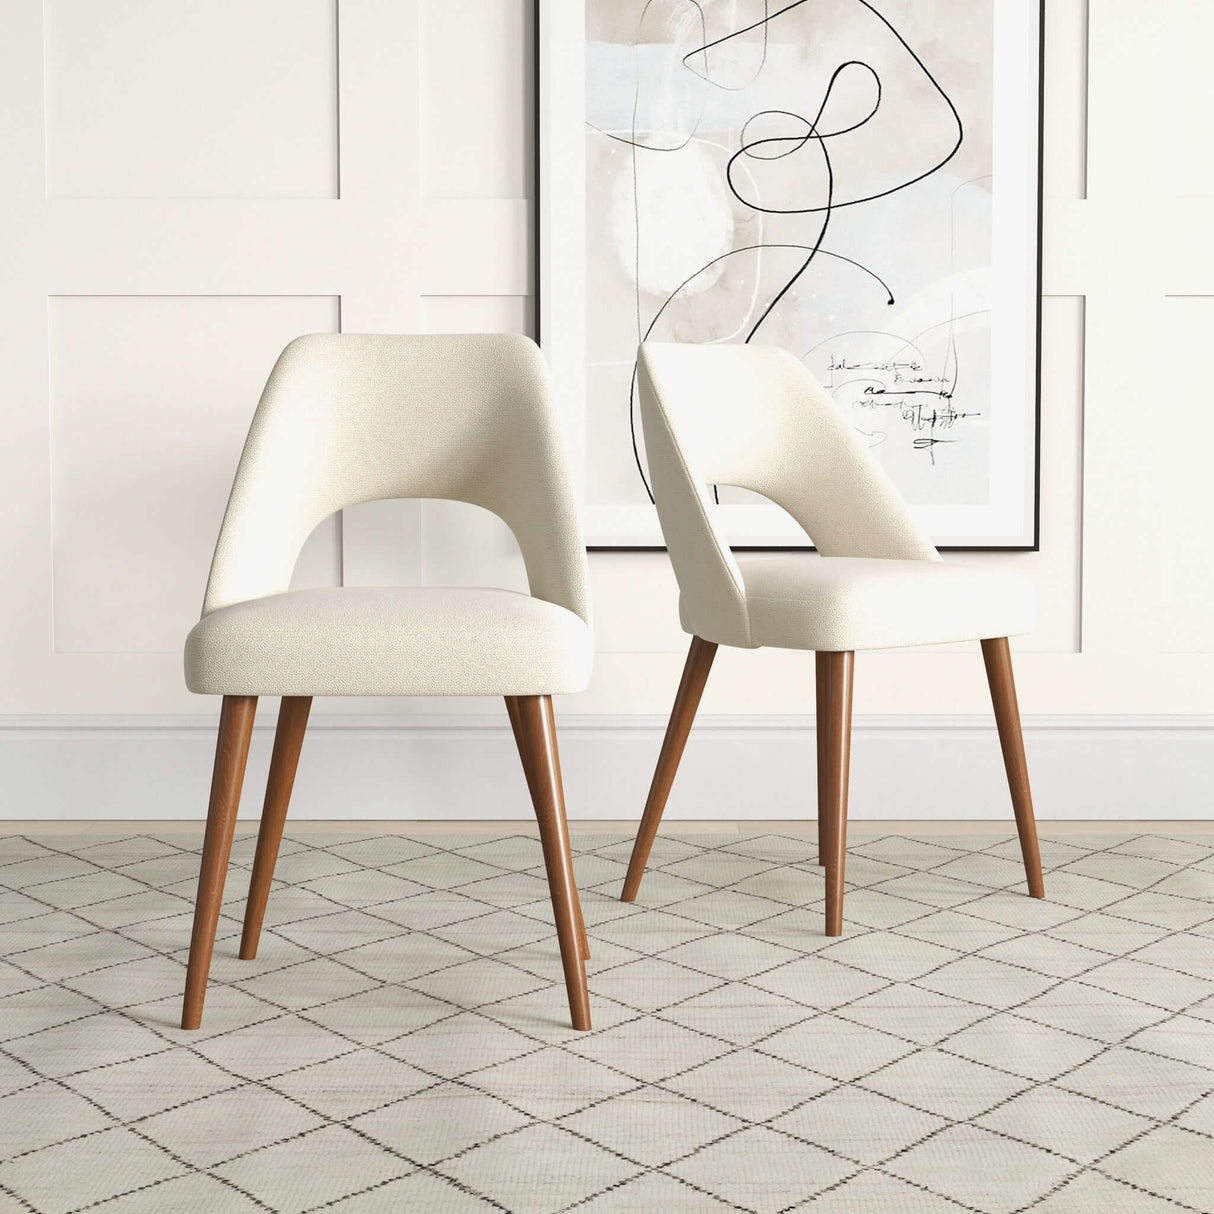 Juliana Mid Century Modern Upholstered Dining Chair (Set of 2) Polyester / Orange - AFC00411 - Luna Furniture